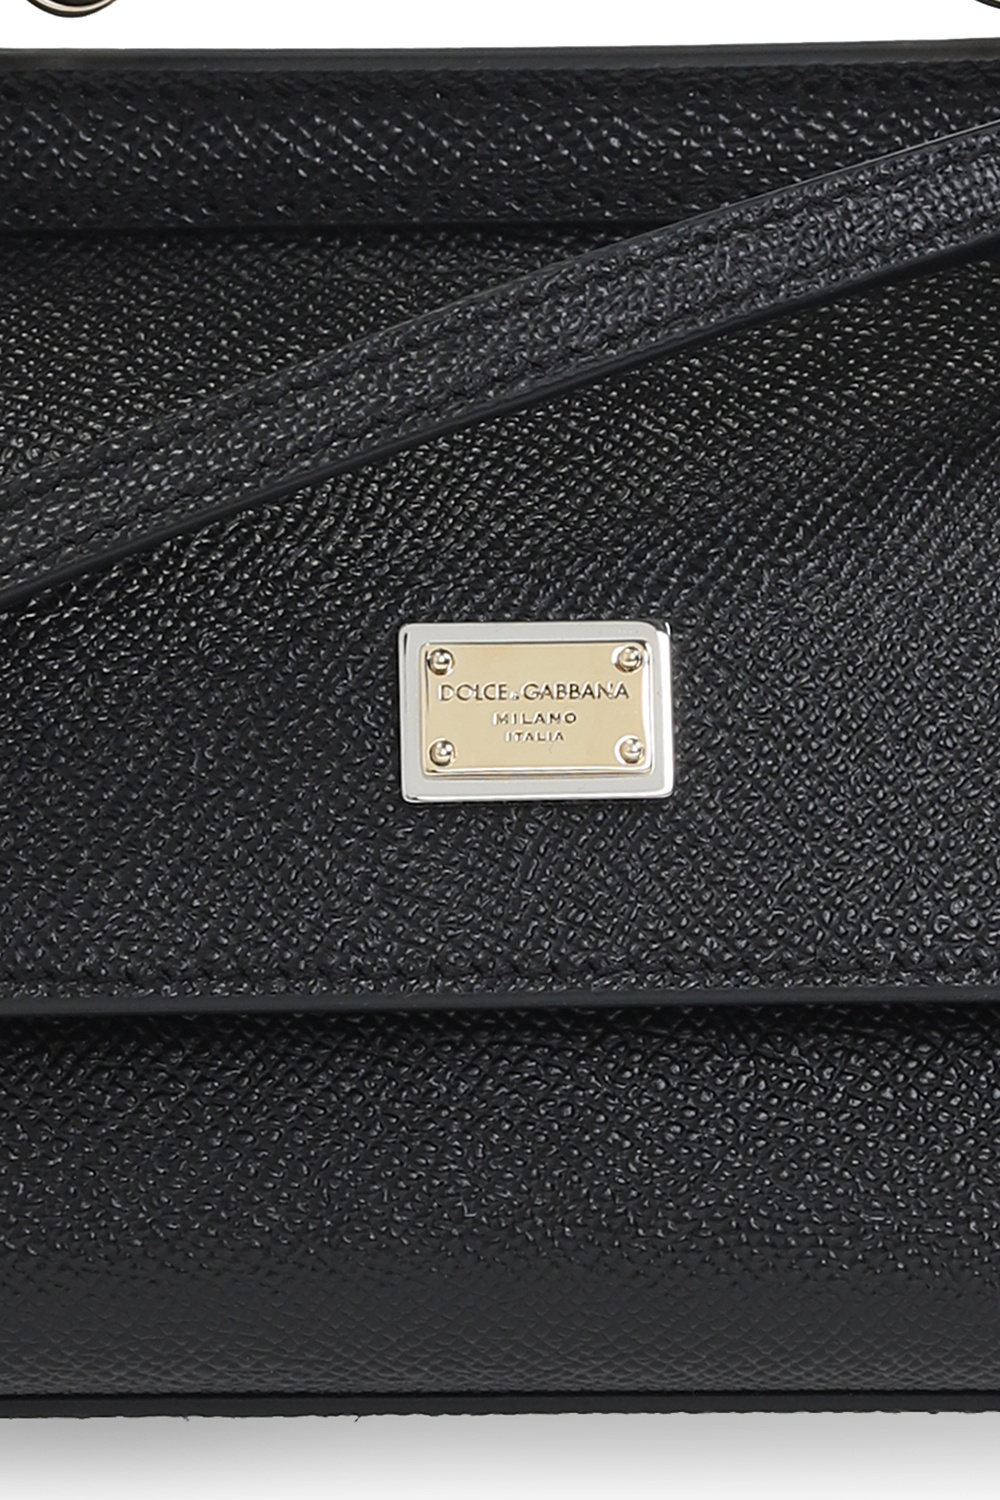 Dolce & Gabbana - Sicily Regular Dauphine Leather Black